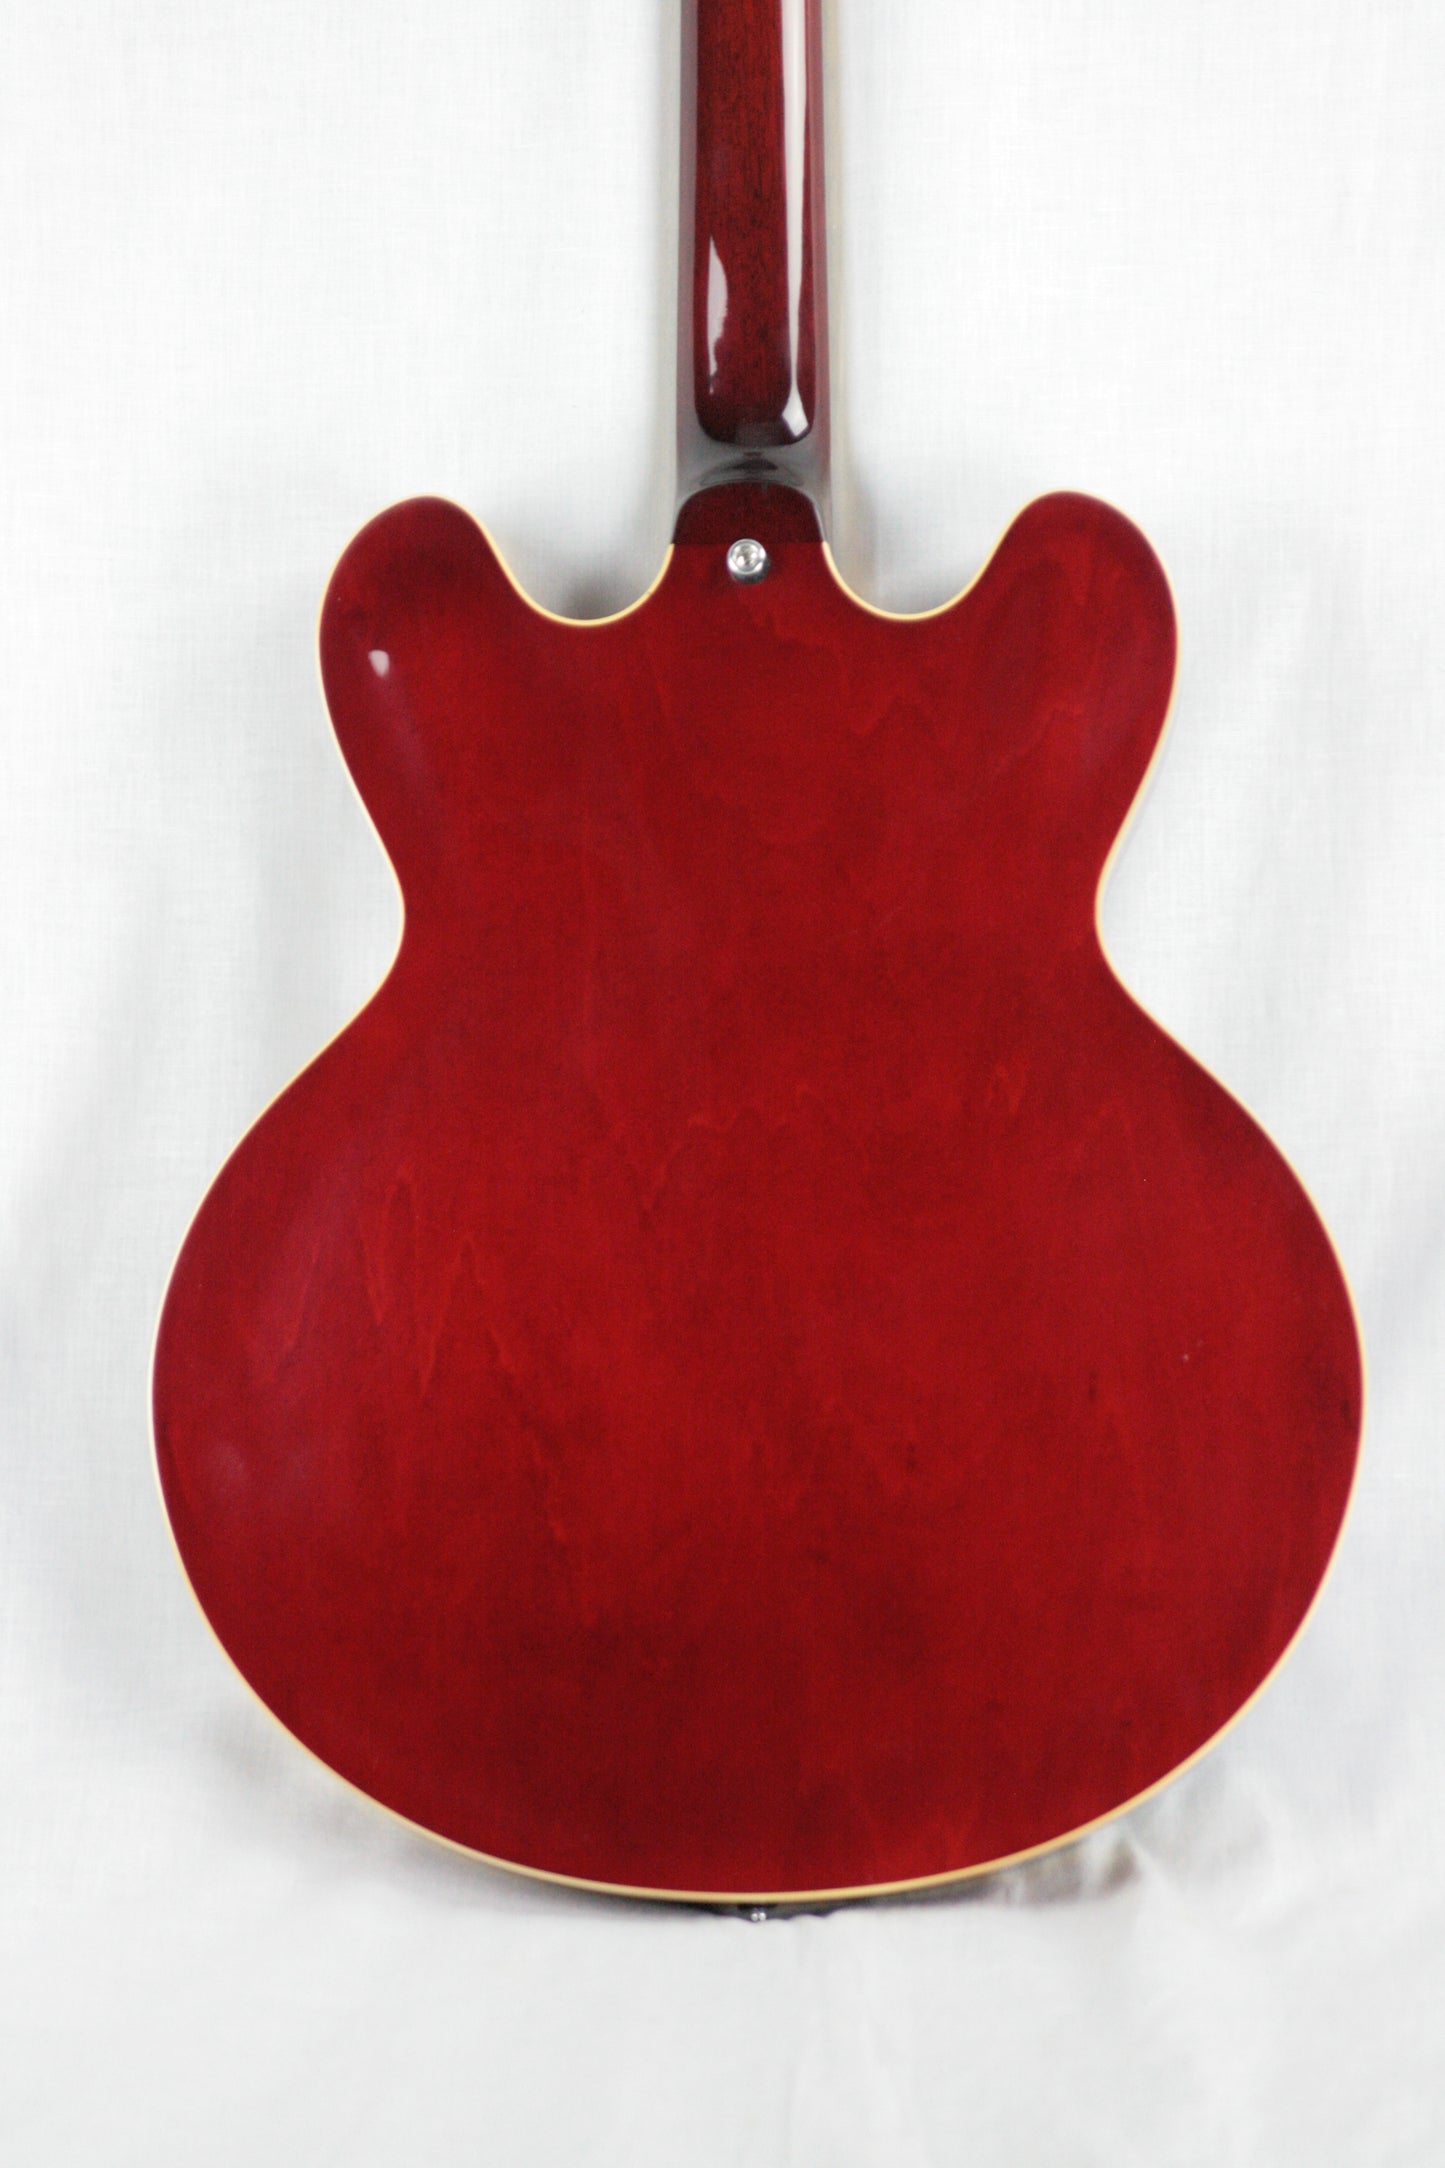 2010 Gibson Custom Shop ES-335 BLOCK! Antique Faded Cherry 1963 Reissue 63 es335